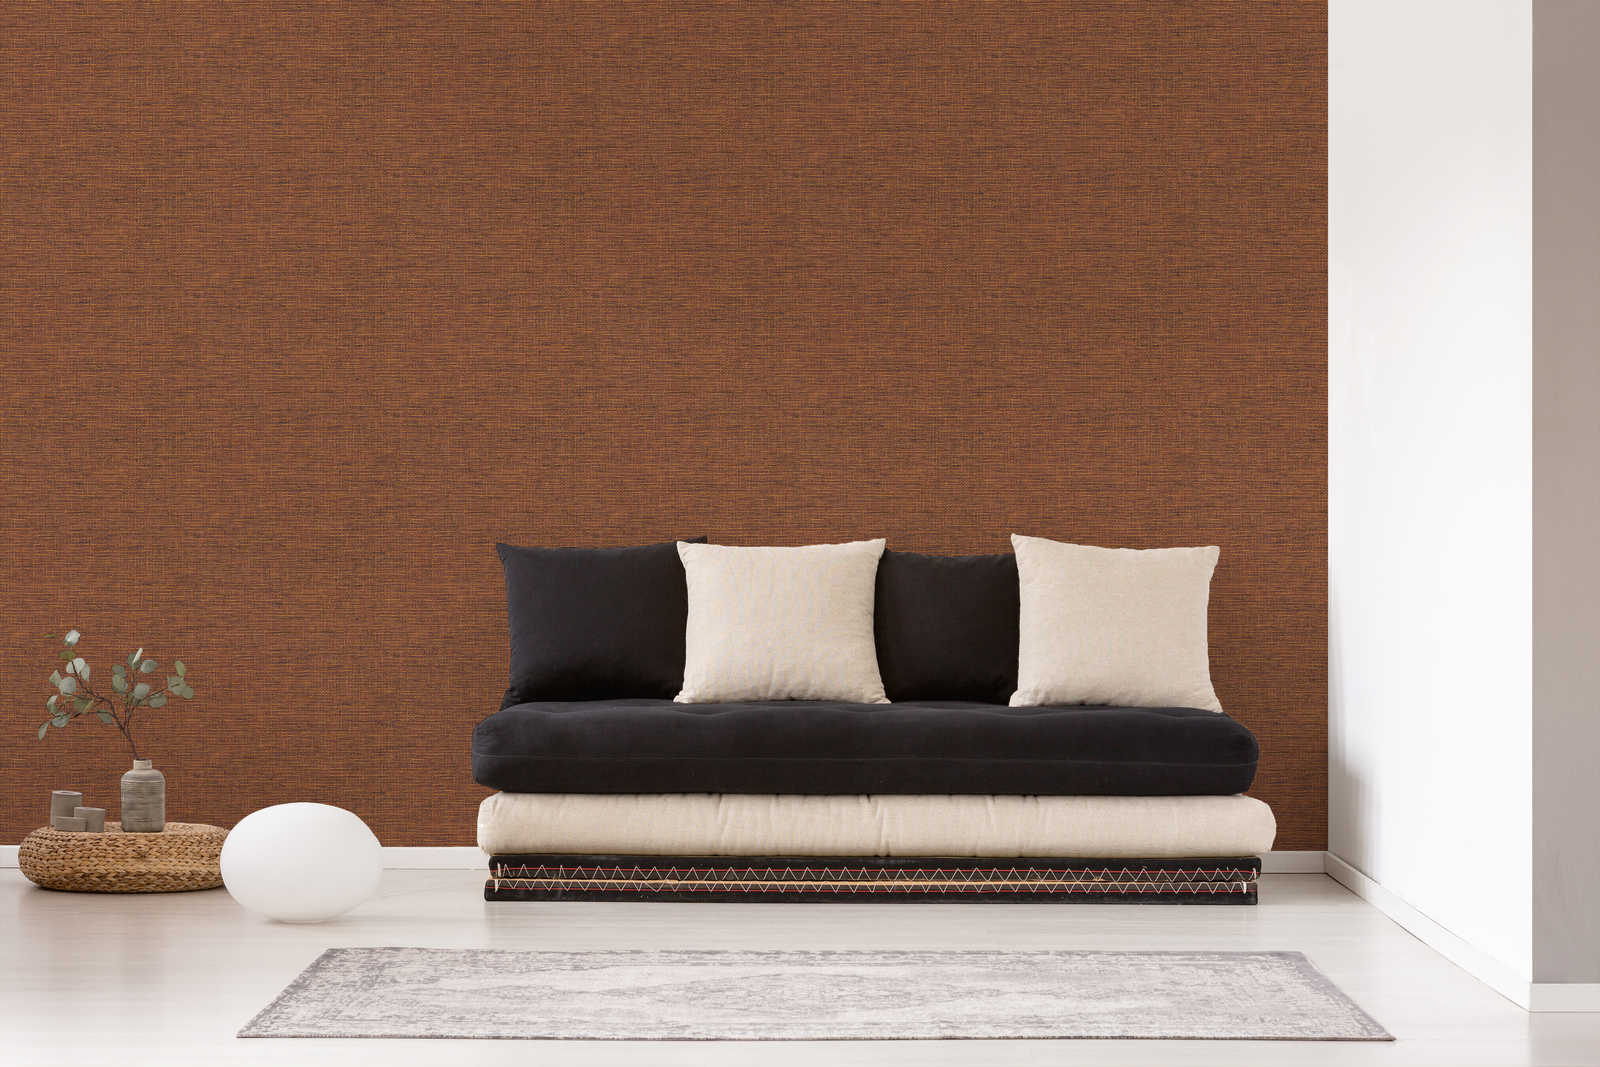             Ethno wallpaper orange-brown with raffia fabric look
        